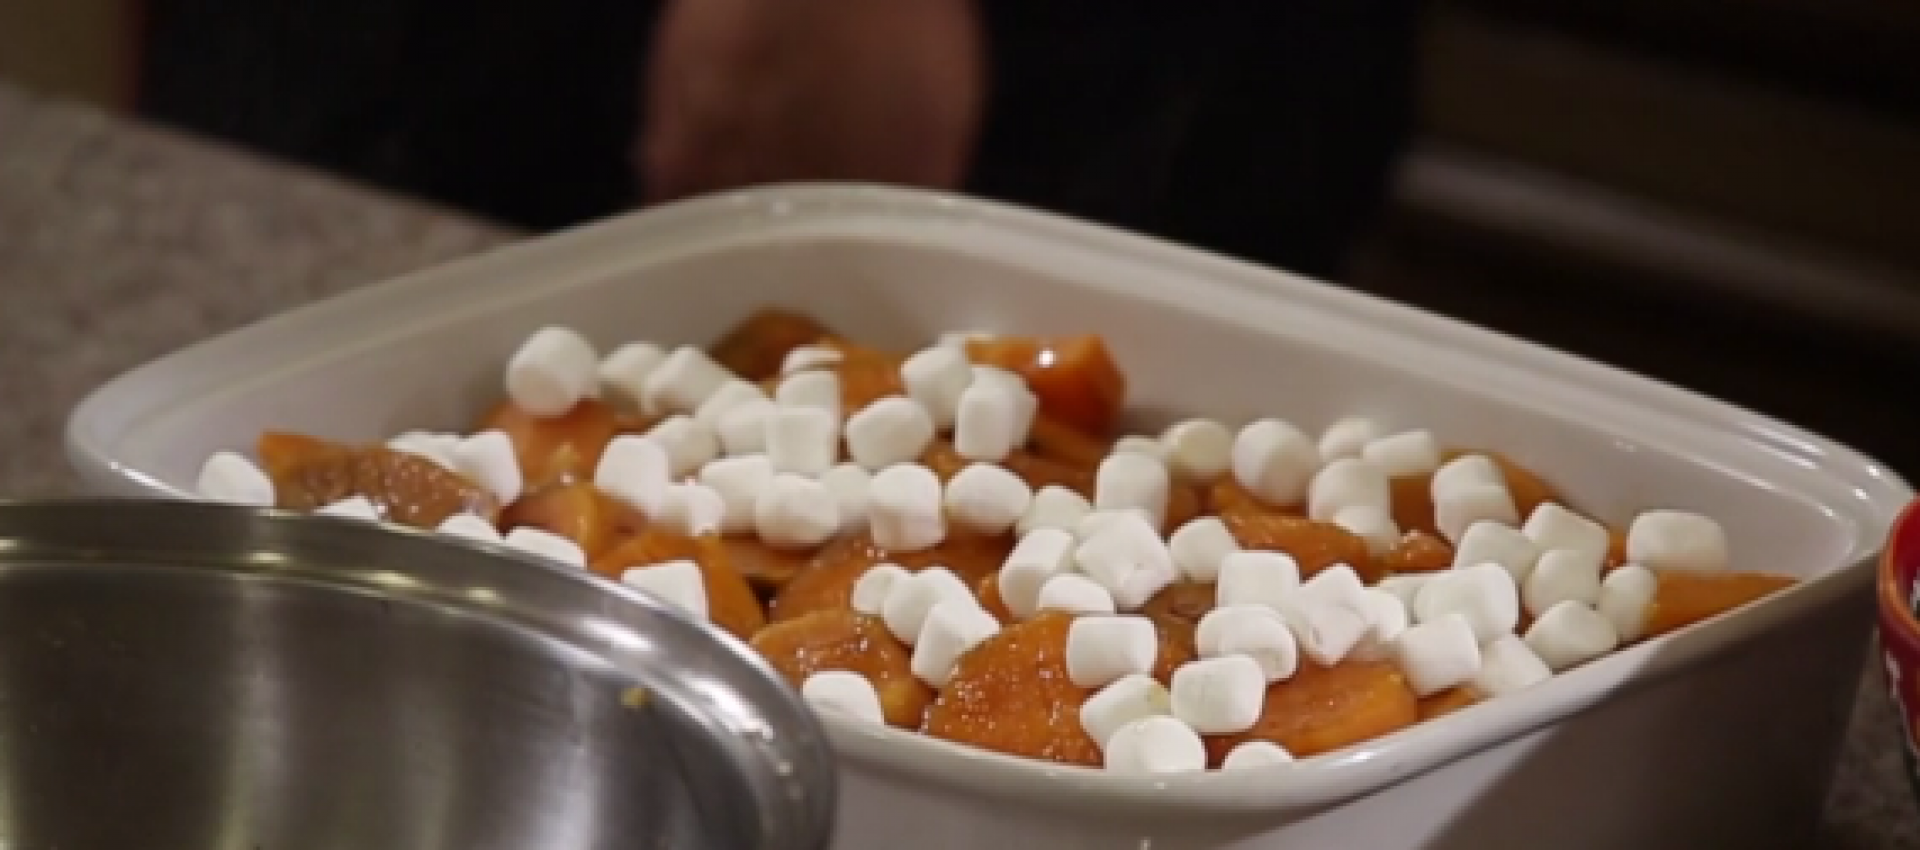 Sweet Potatoes and Marshmallow Casserole Image